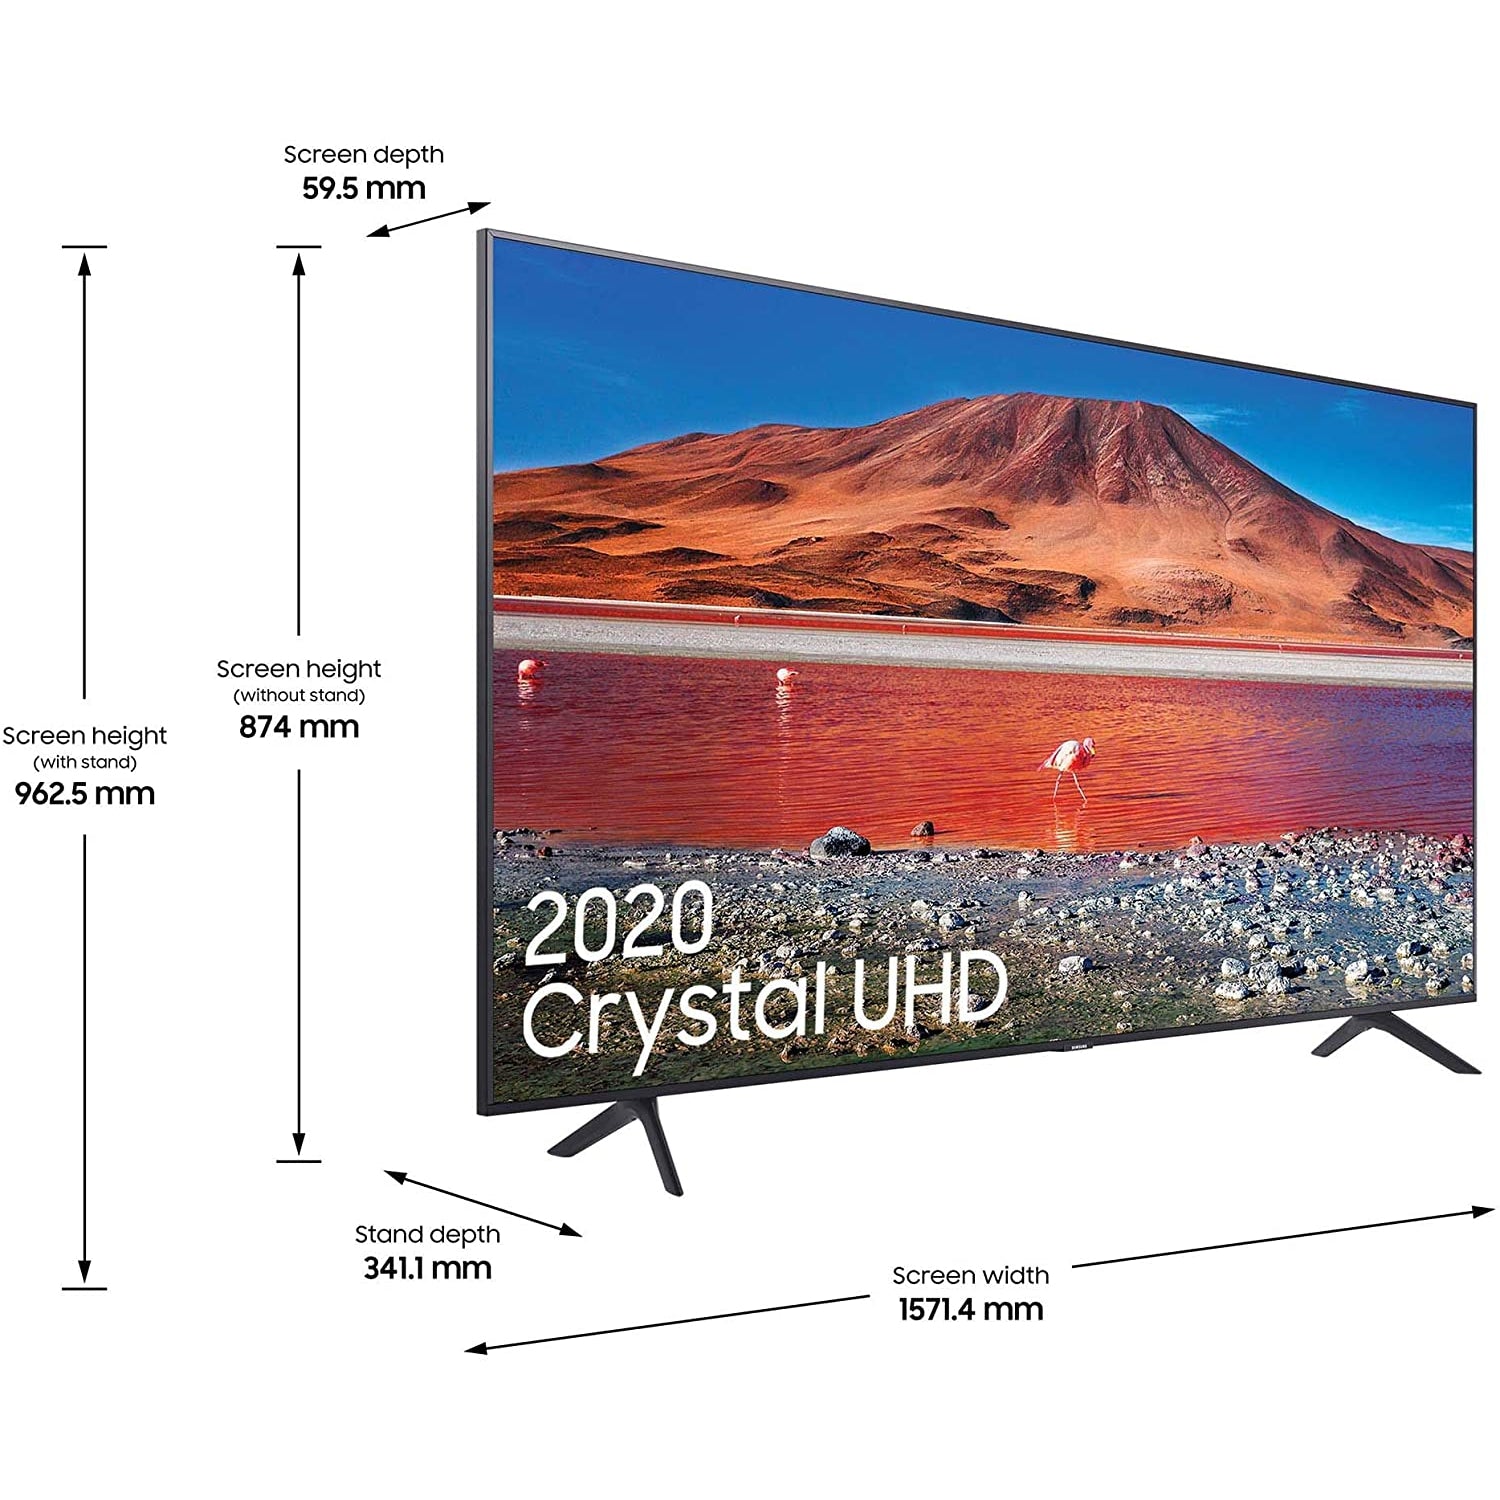 70" TU7100 Crystal UHD 4K HDR Smart TV